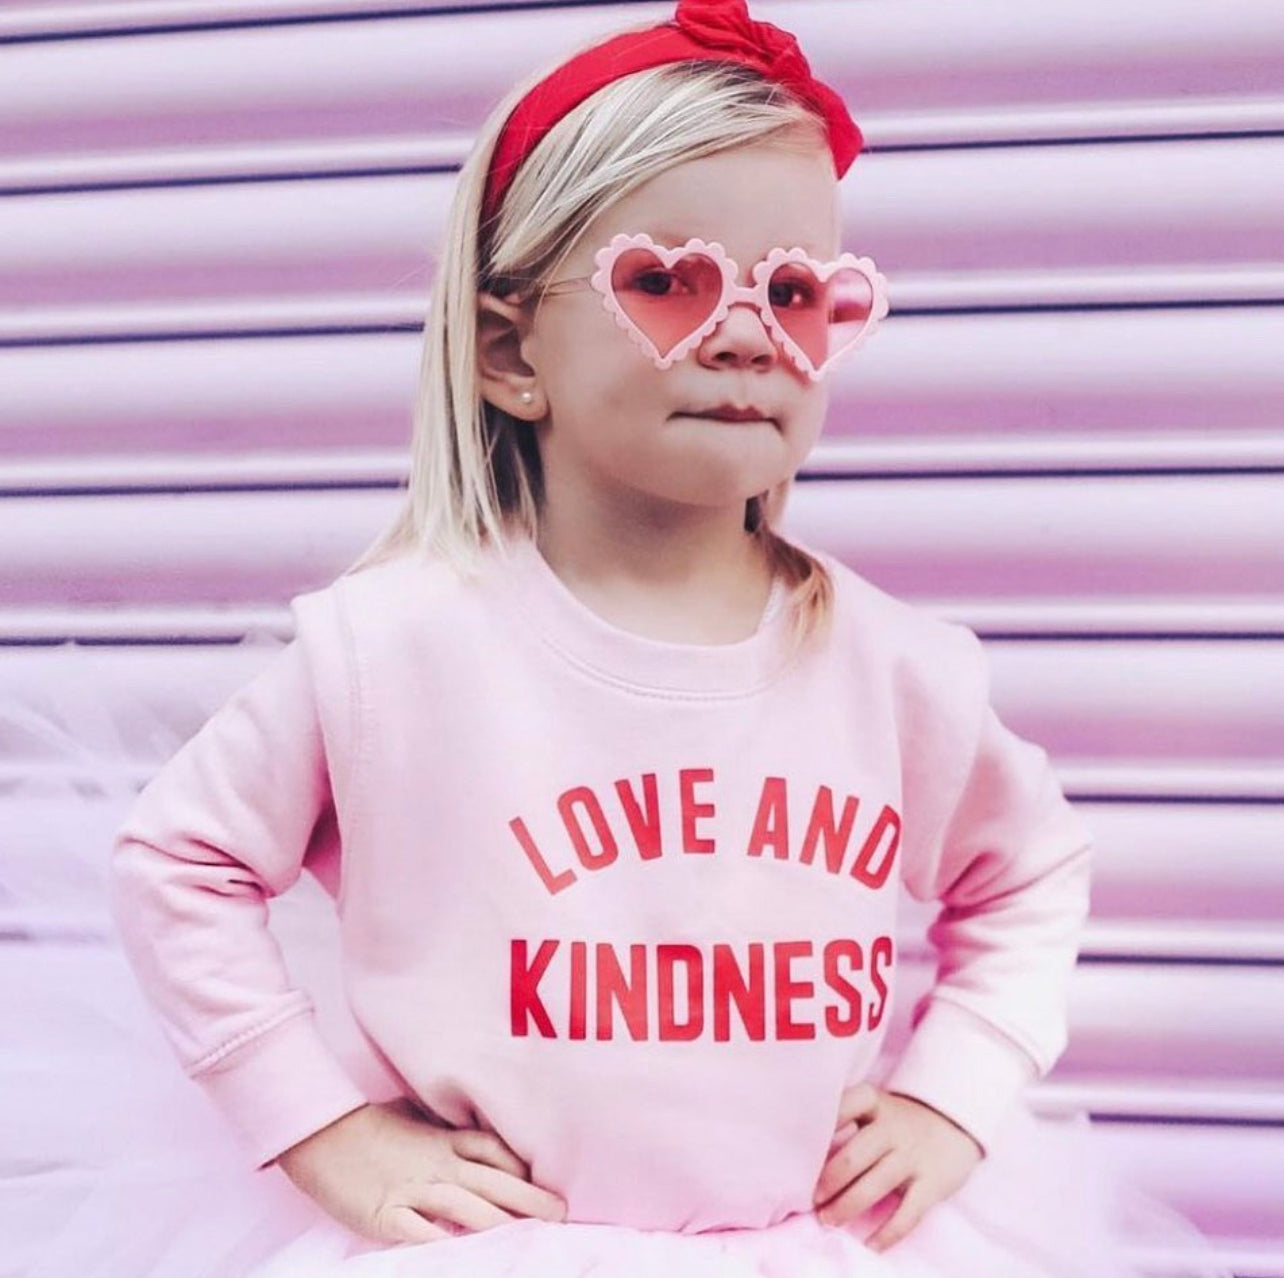 Love And Kindness Sweater Kids